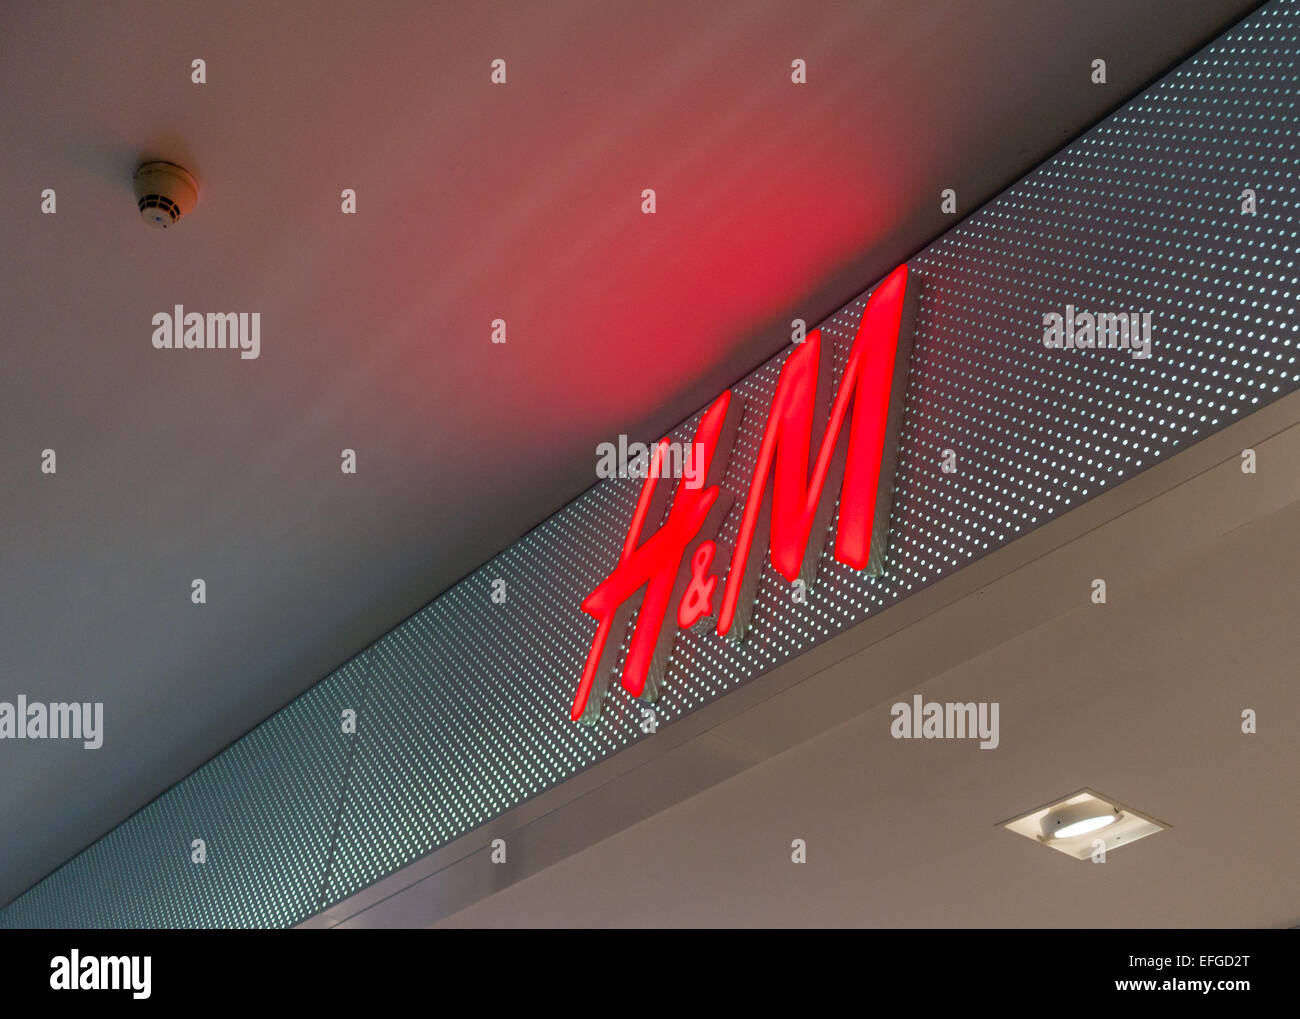 H&M Store sign in Vivo City Singapore Stock Photo - Alamy